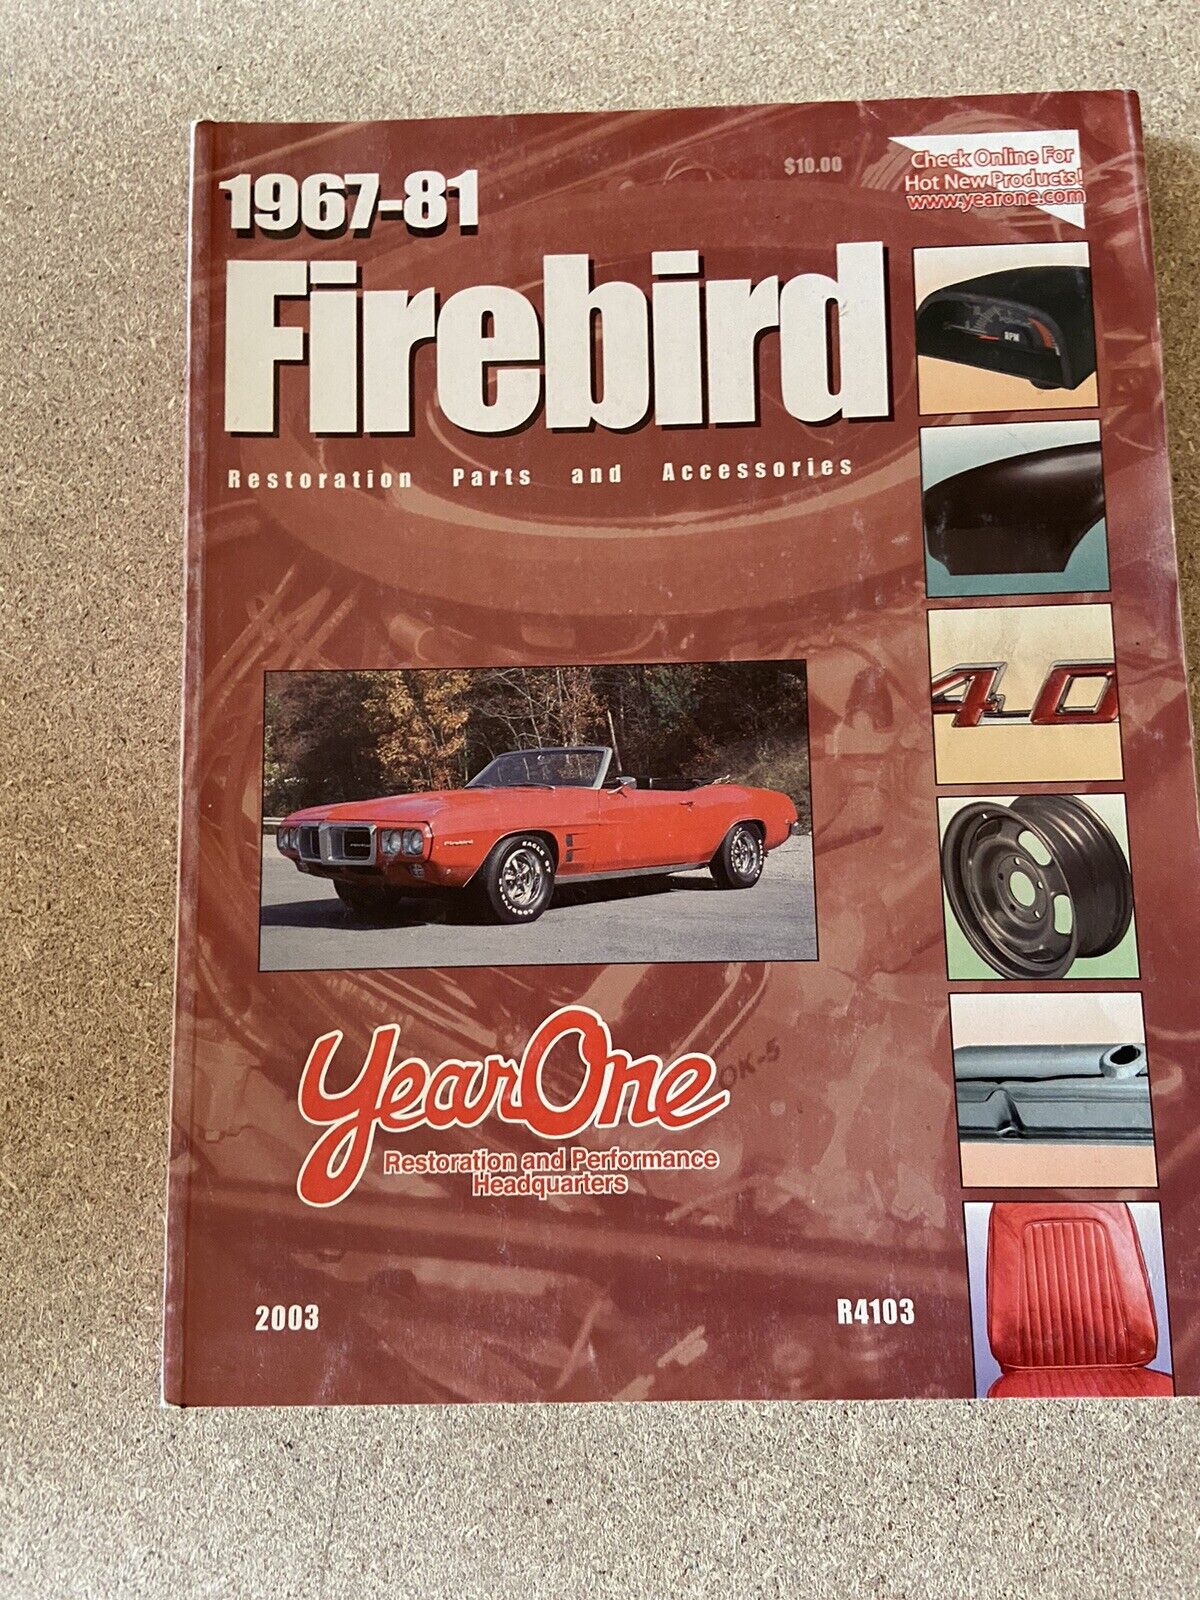 Year One 1967 -1981 Firebird Restoration Parts 2003 R4103 Retail Catalog Pontiac